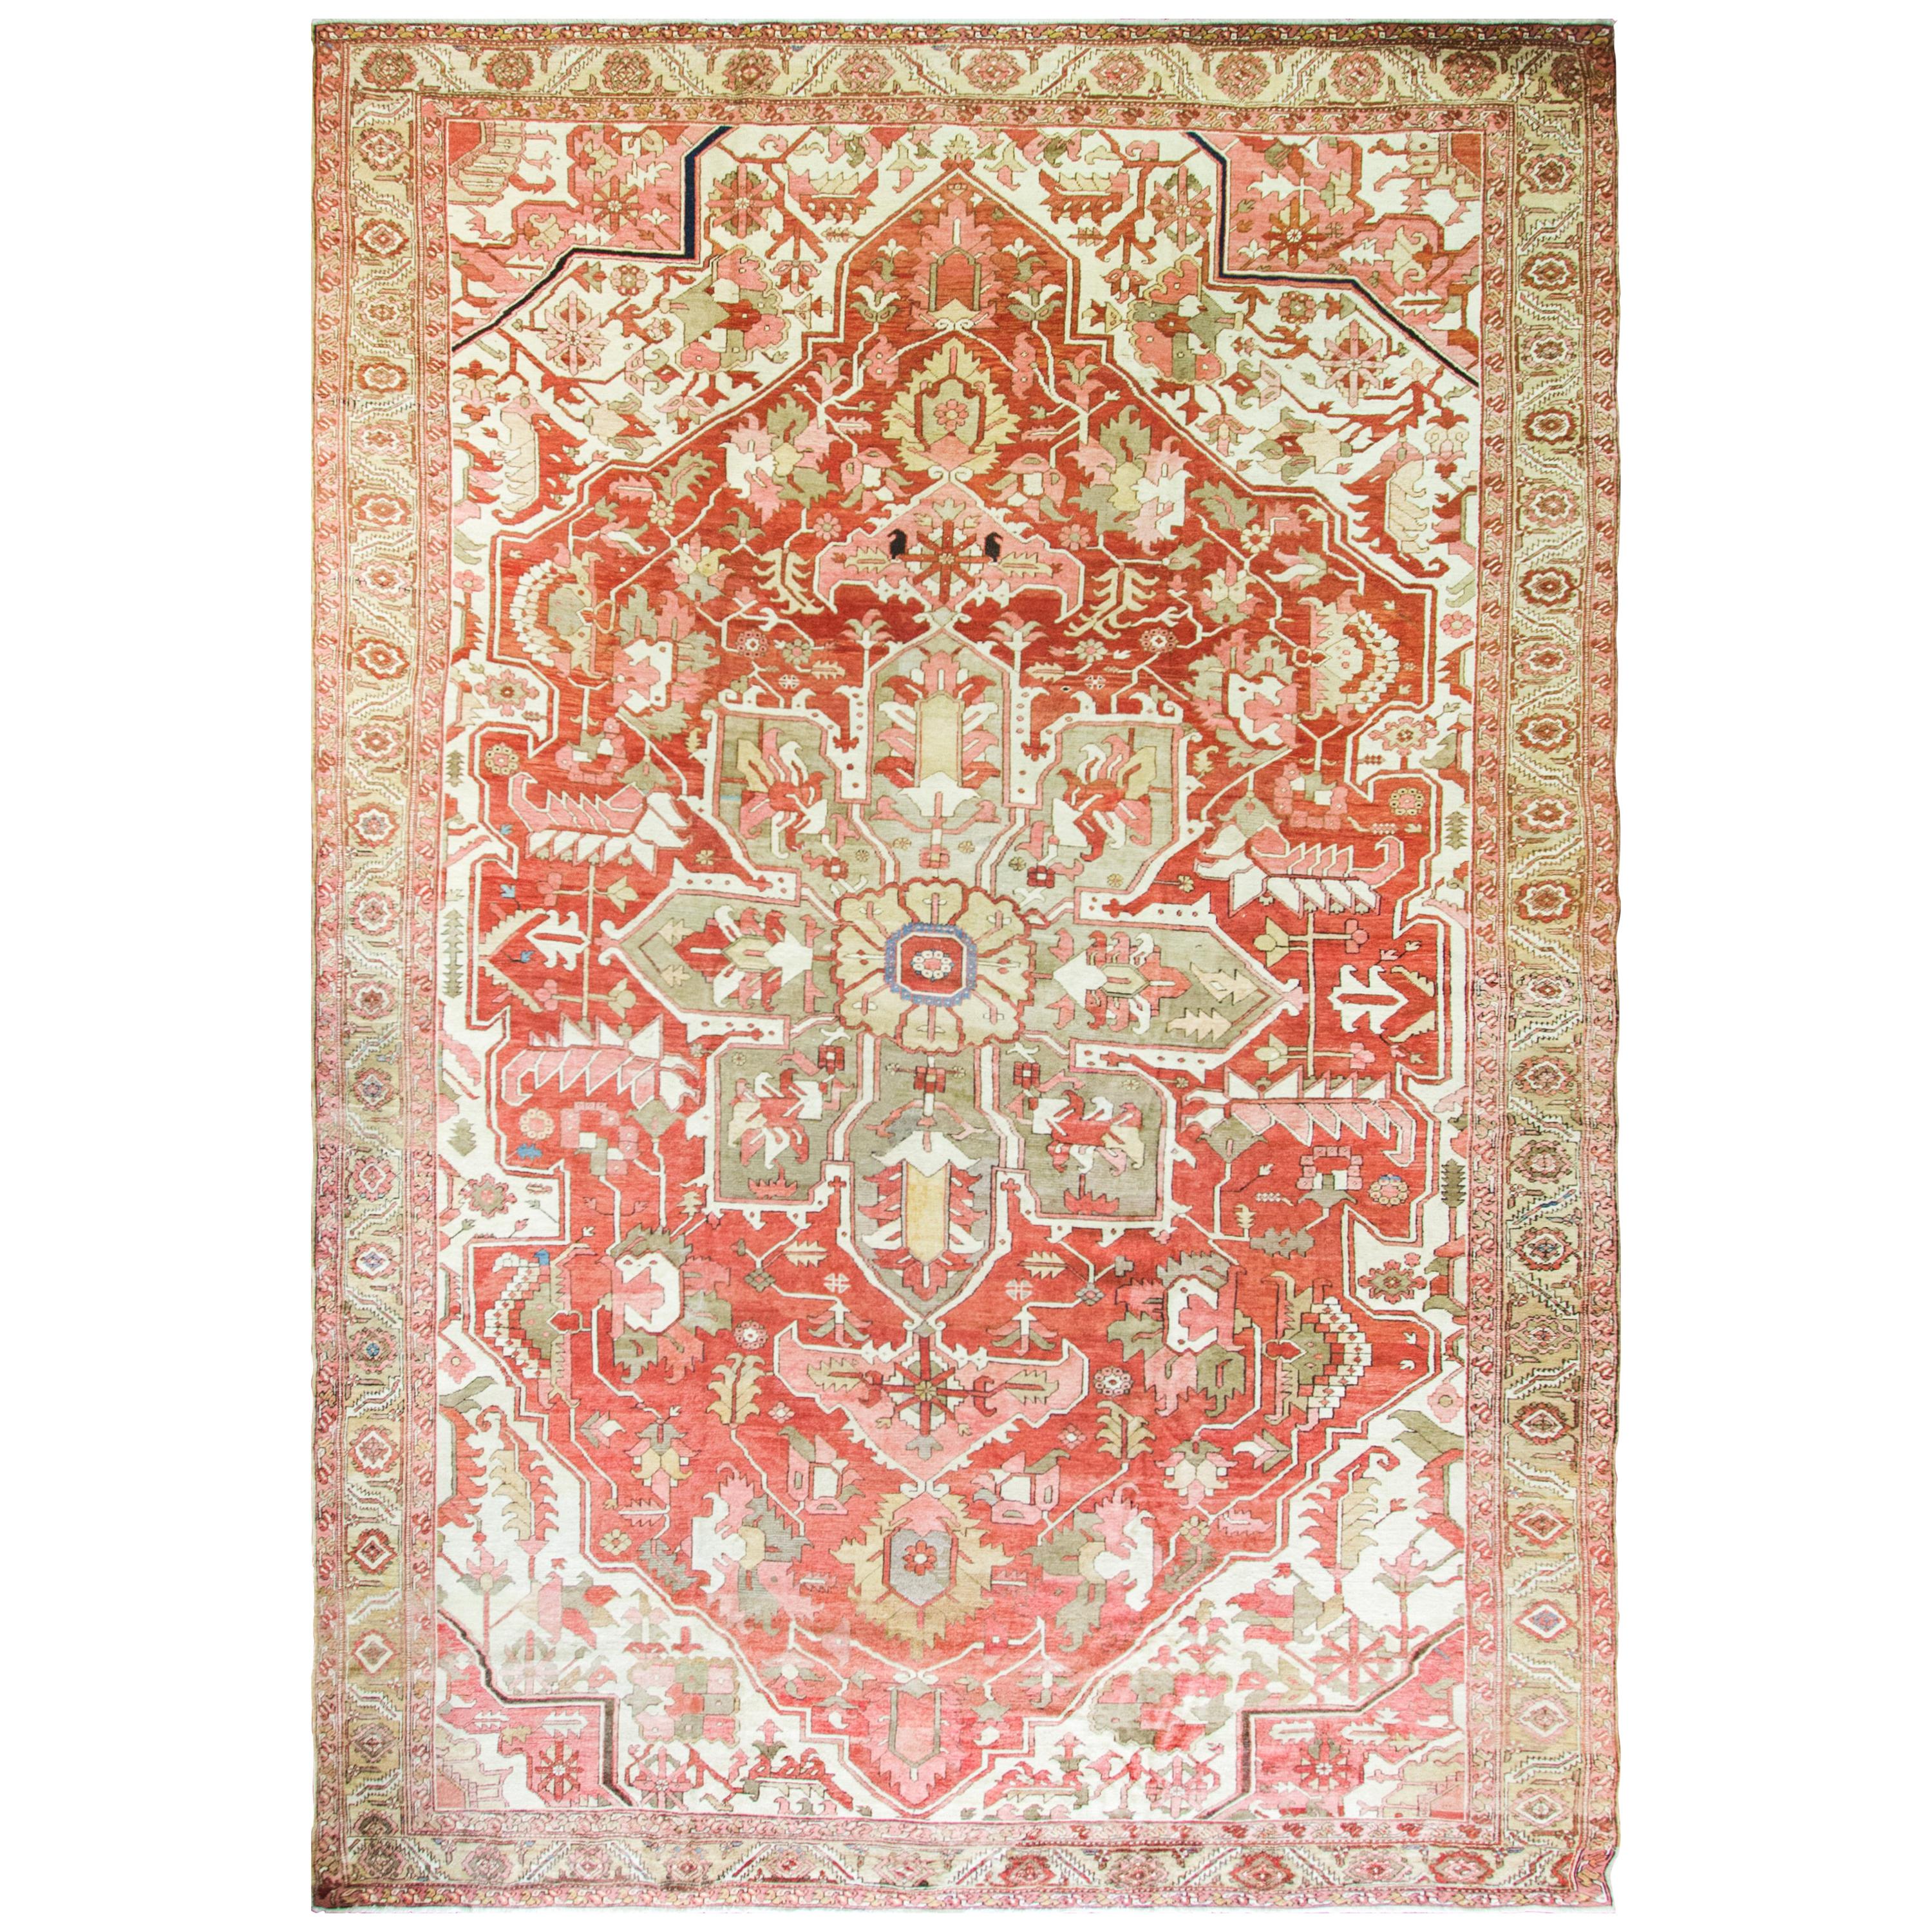  Antique Persian Serapi Carpet